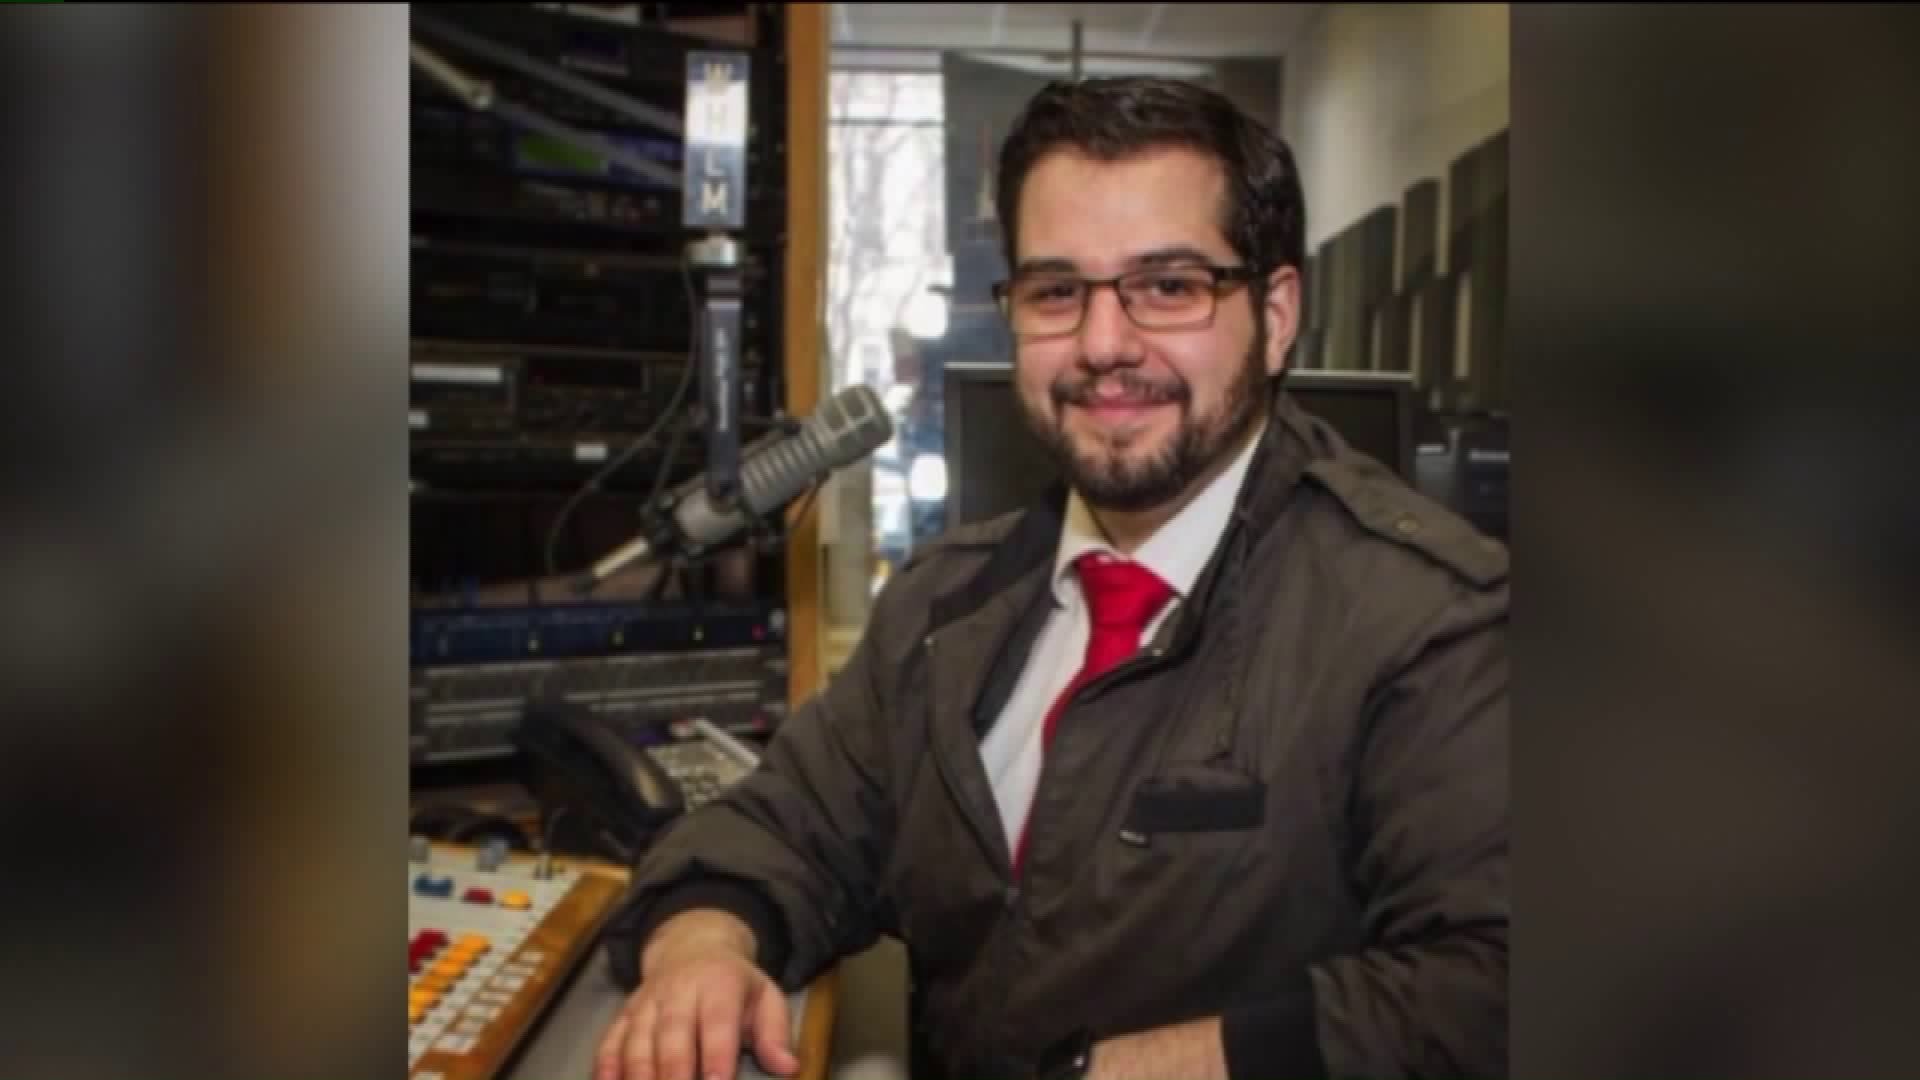 Controversial Radio Host Resigns